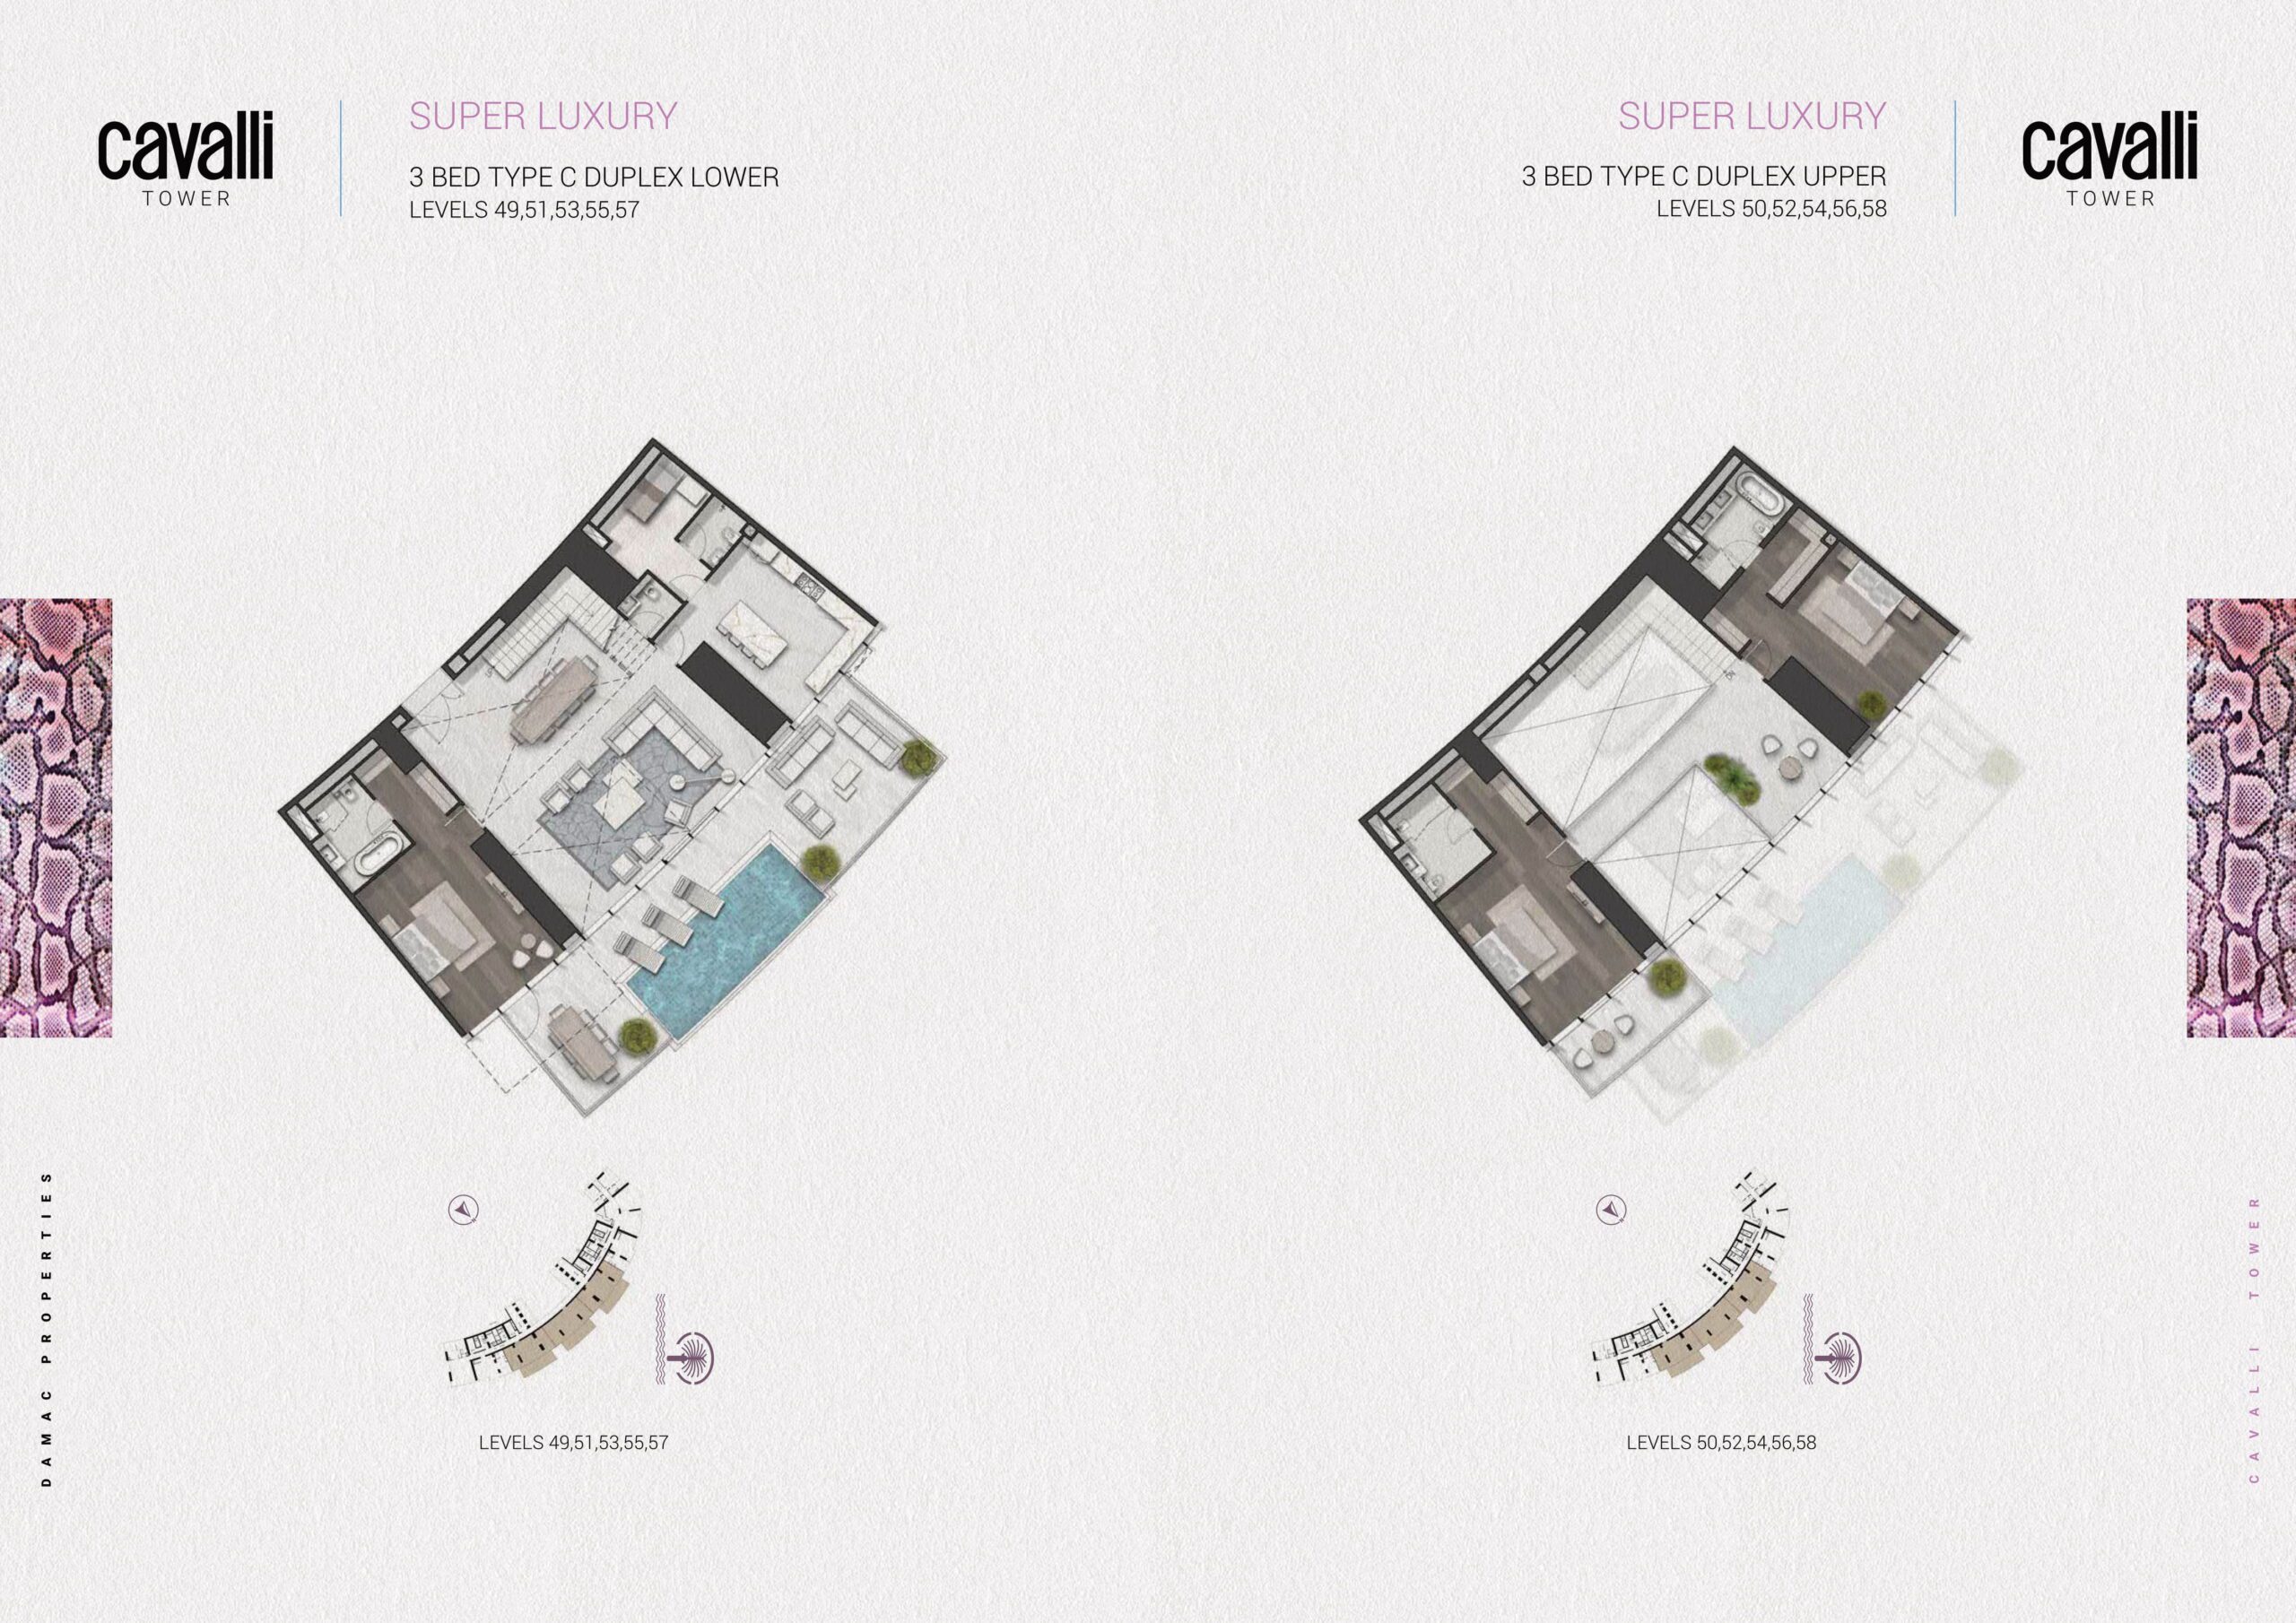 11.05.22 CAVALLI Tower Super luxury digital brochure-new-HE-43